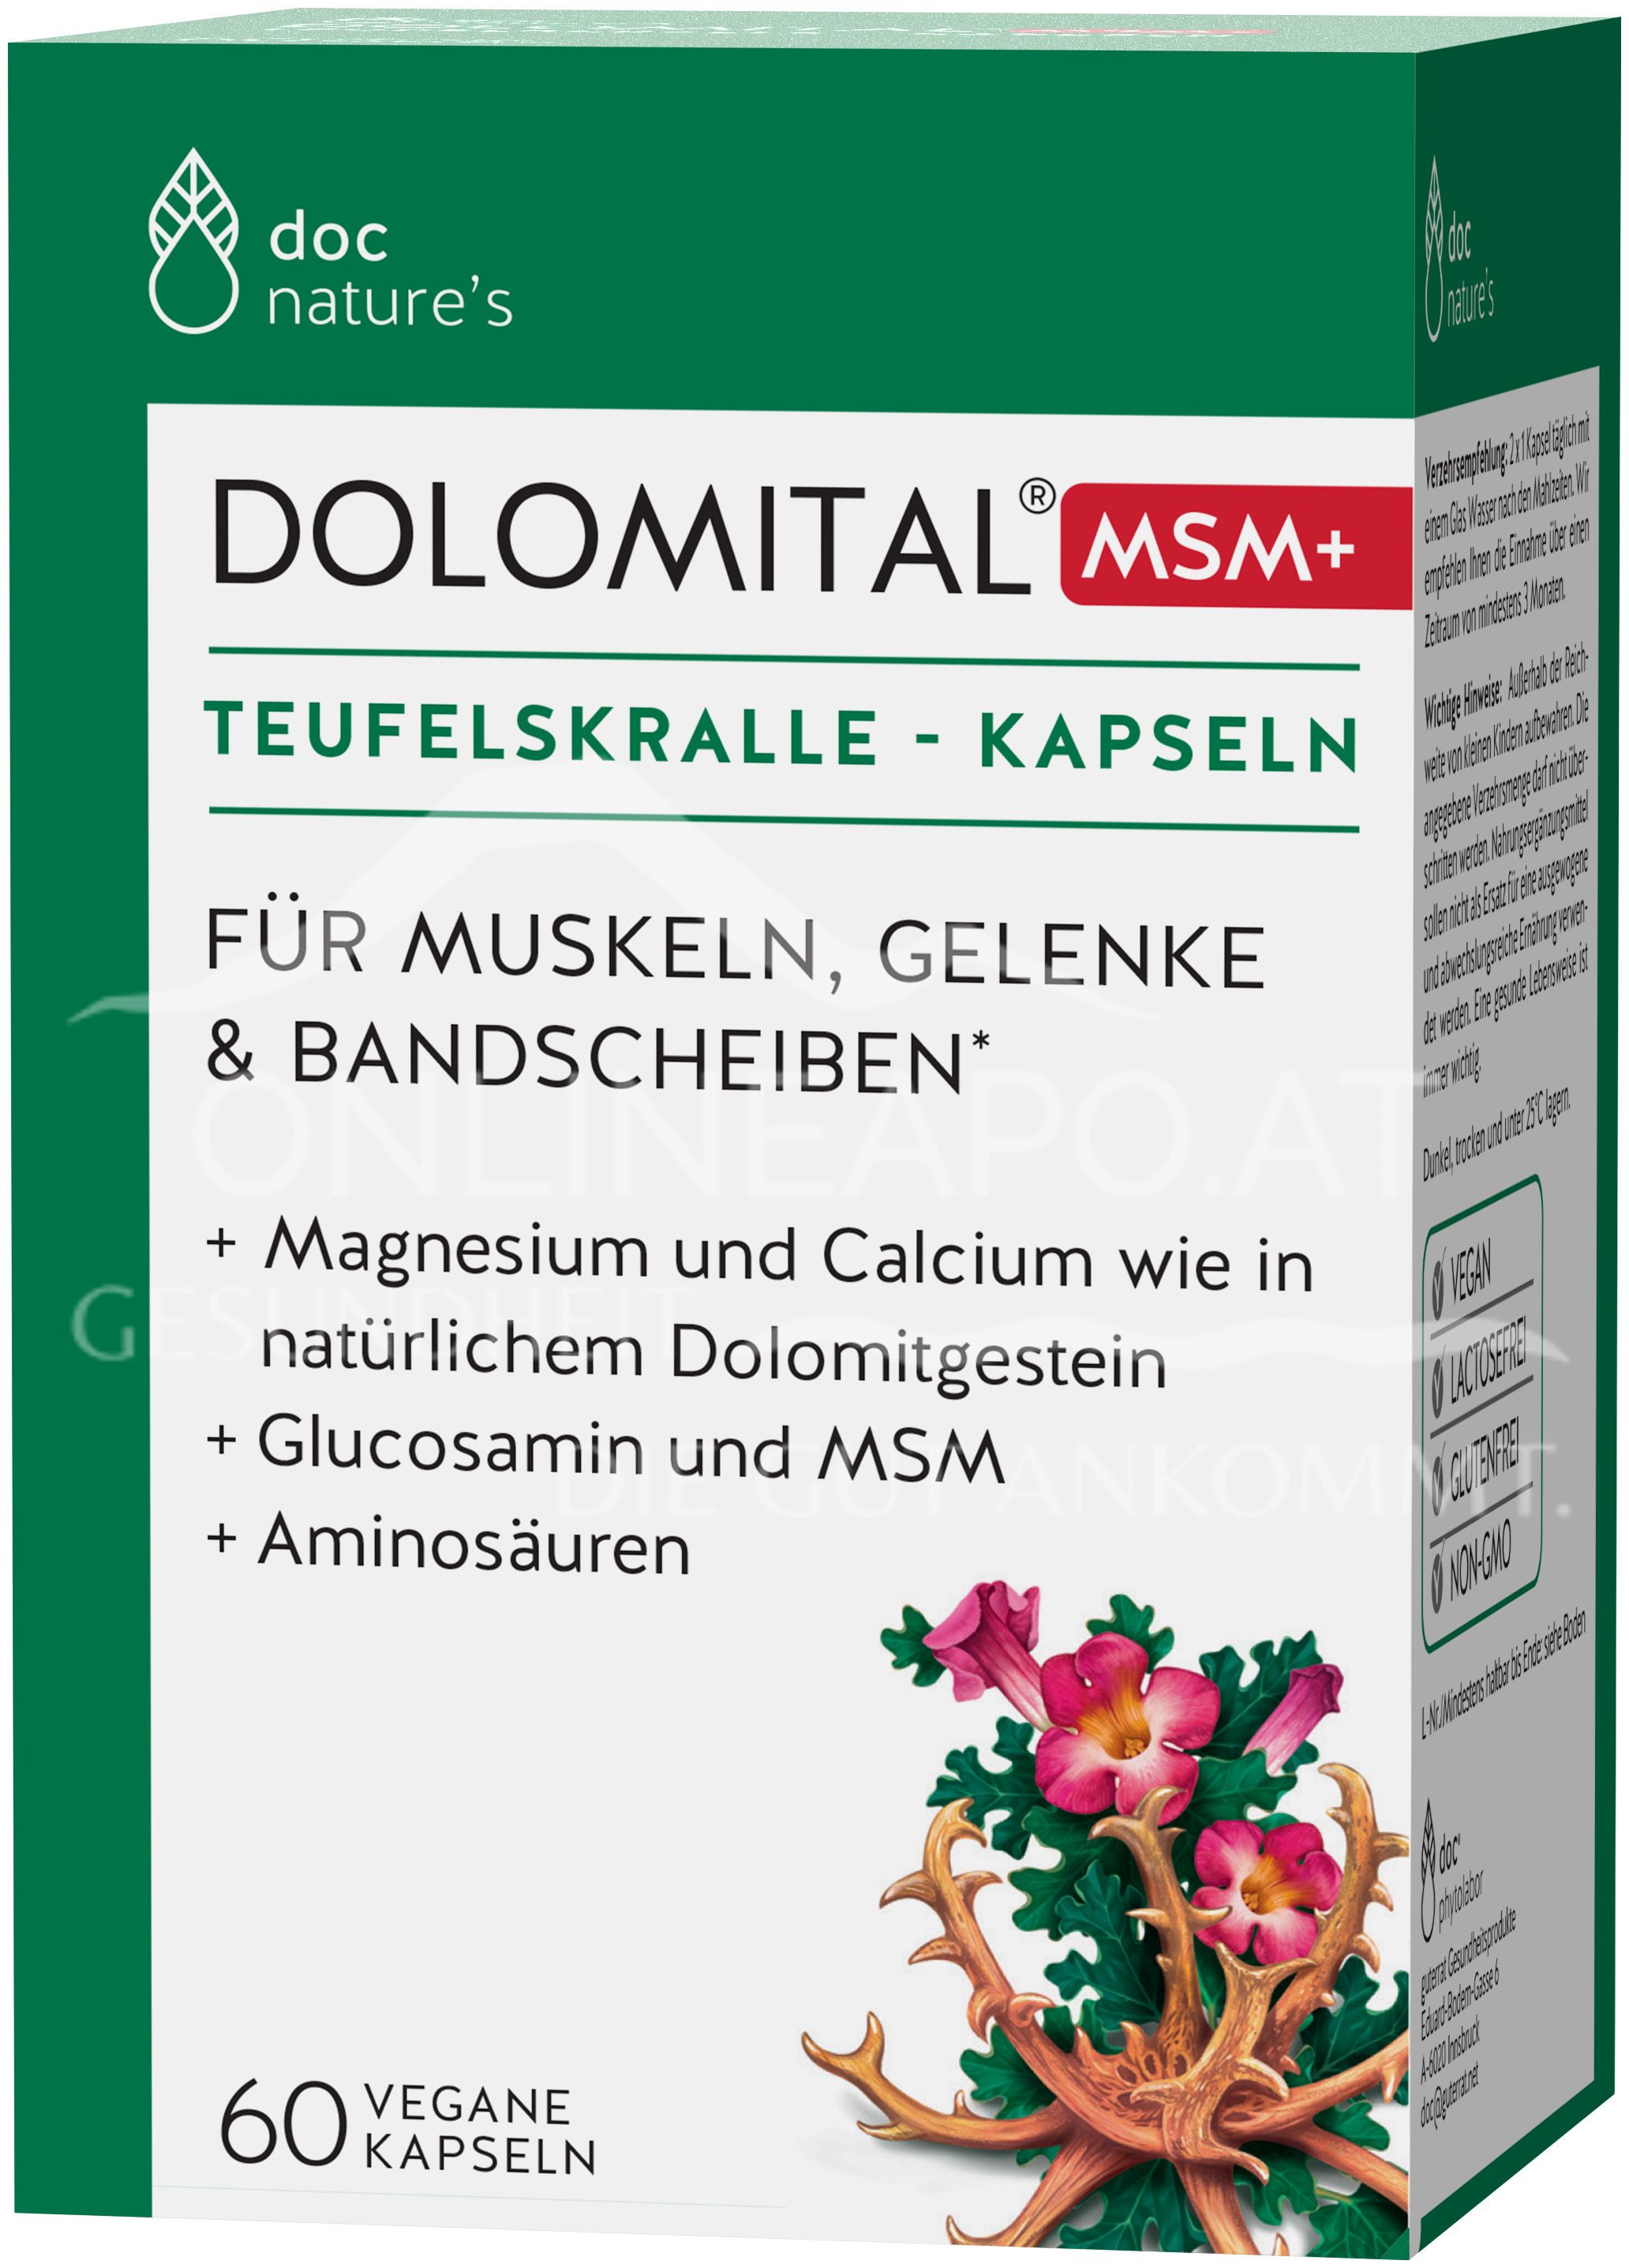 doc nature‘s Dolomital® MSM + Teufelskralle Kapseln